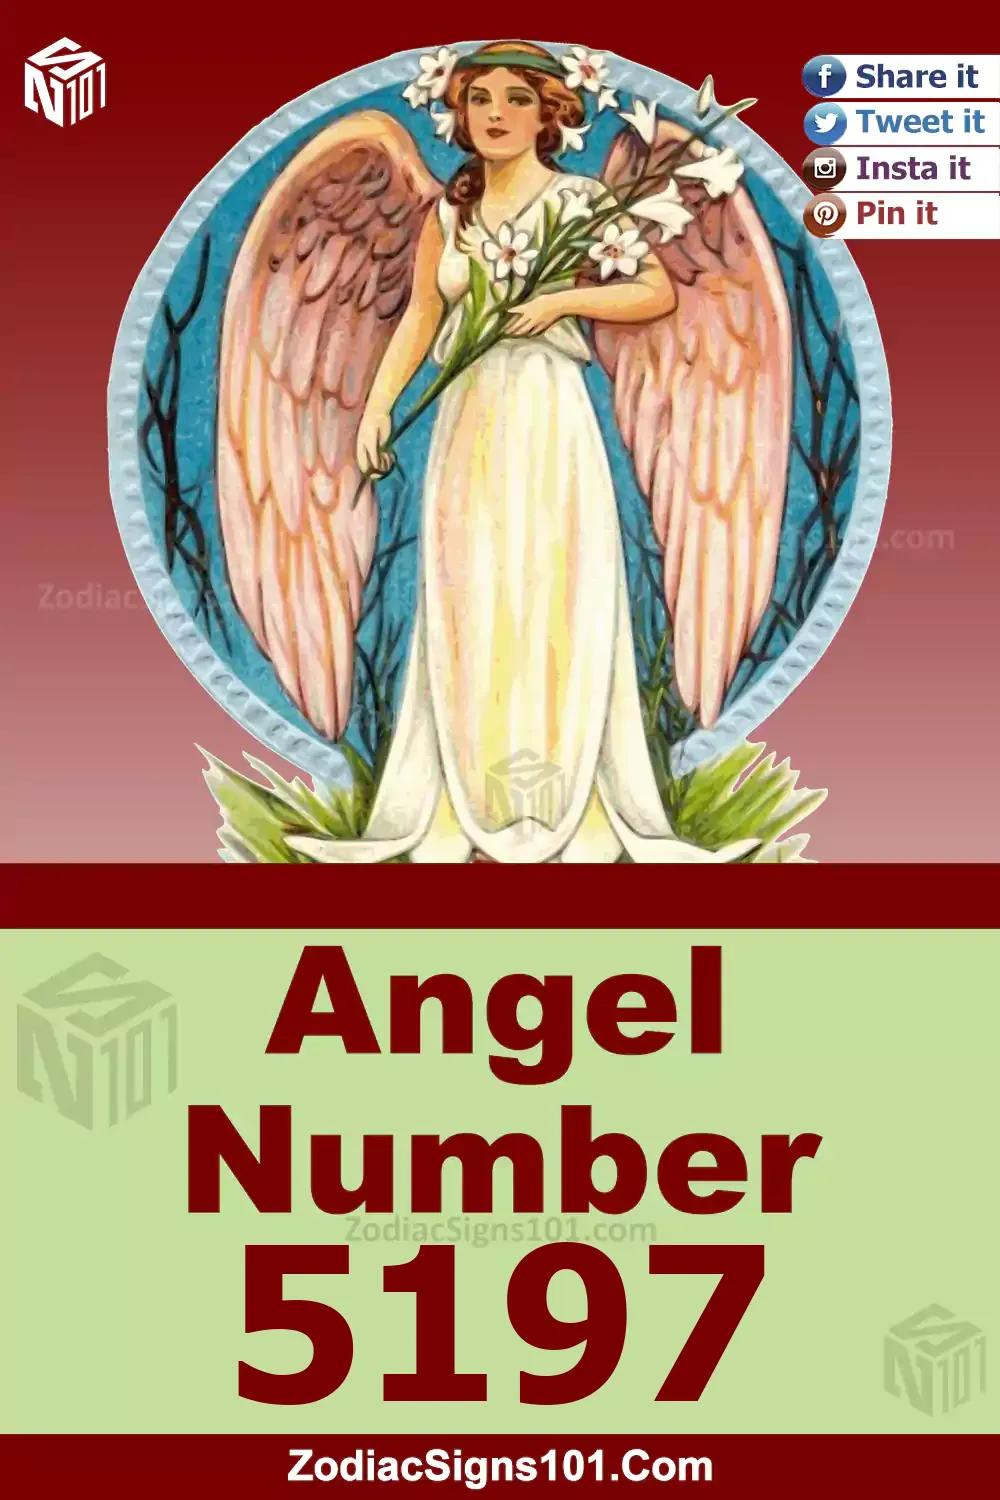 5197-Angel-Number-Meaning.jpg